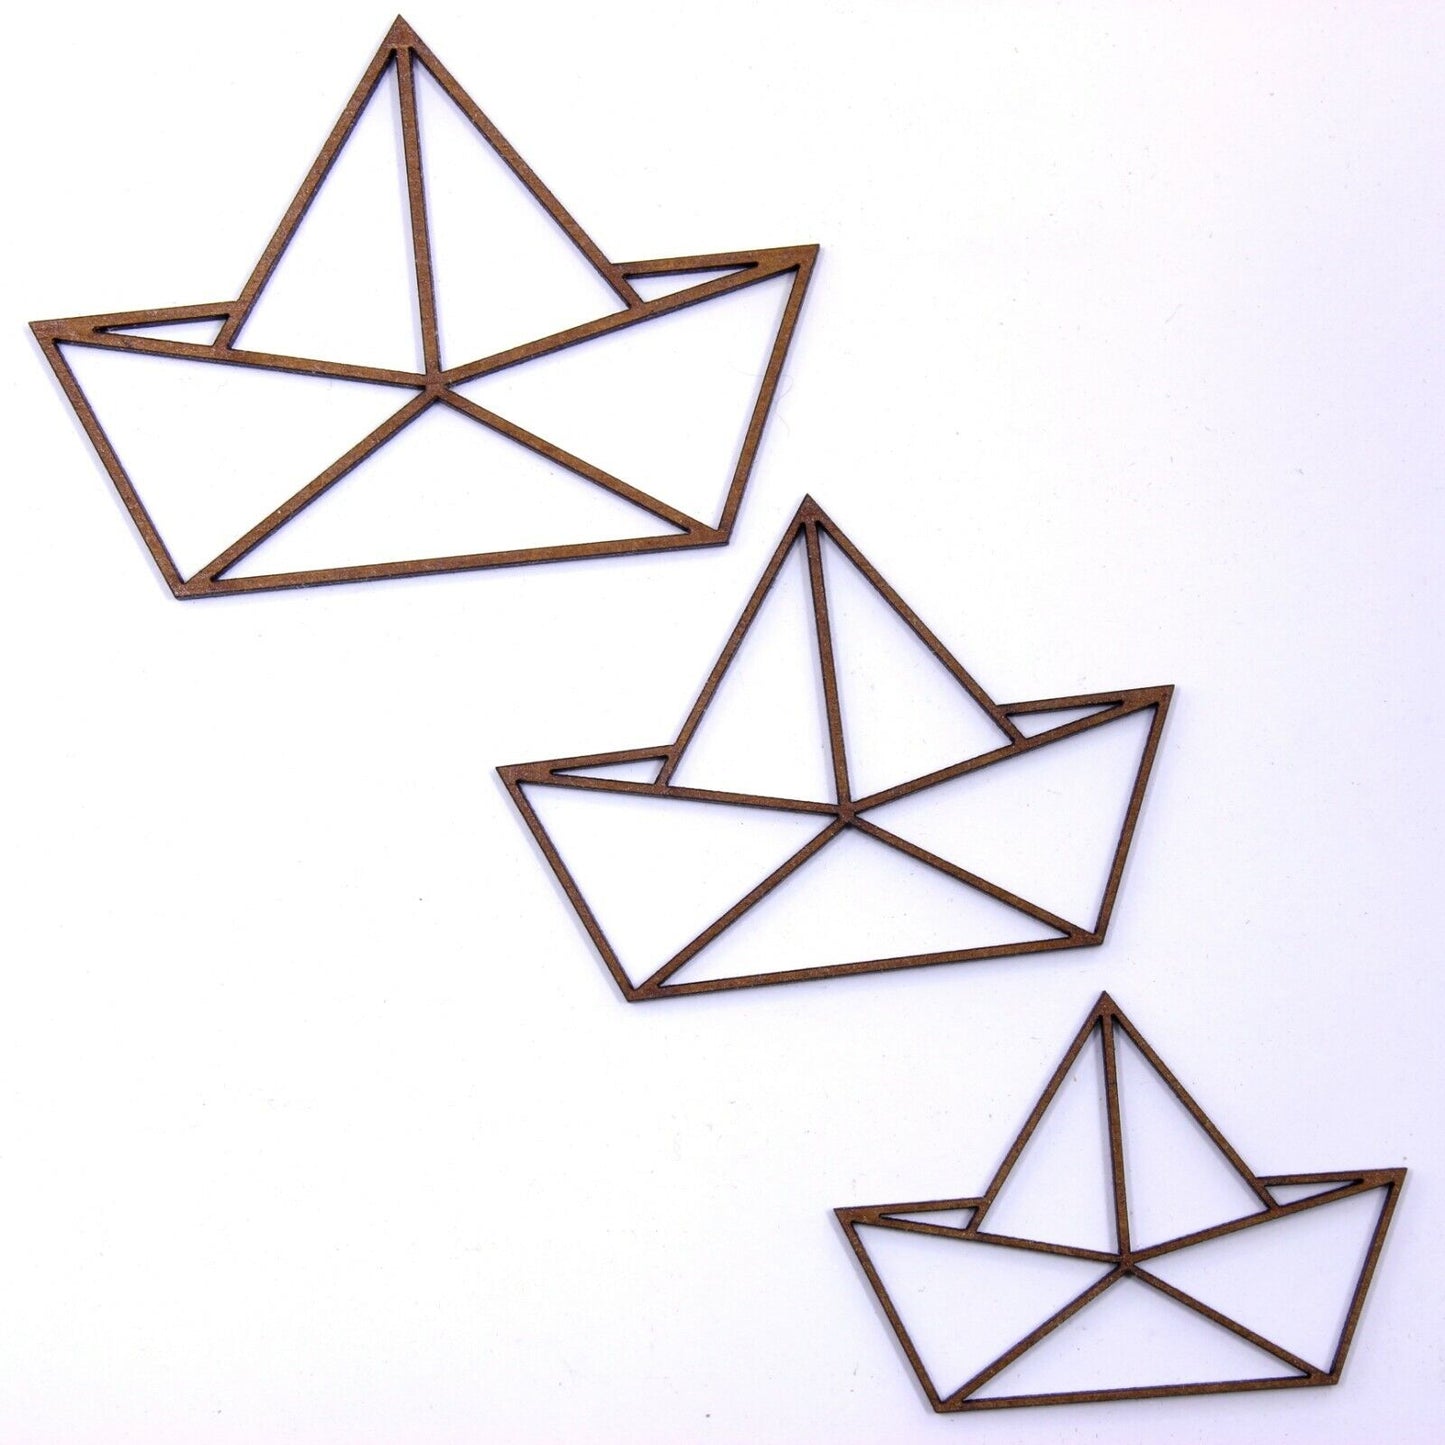 Origami Boat Geometric Craft Shape, Various Sizes, 2mm MDF Wood.